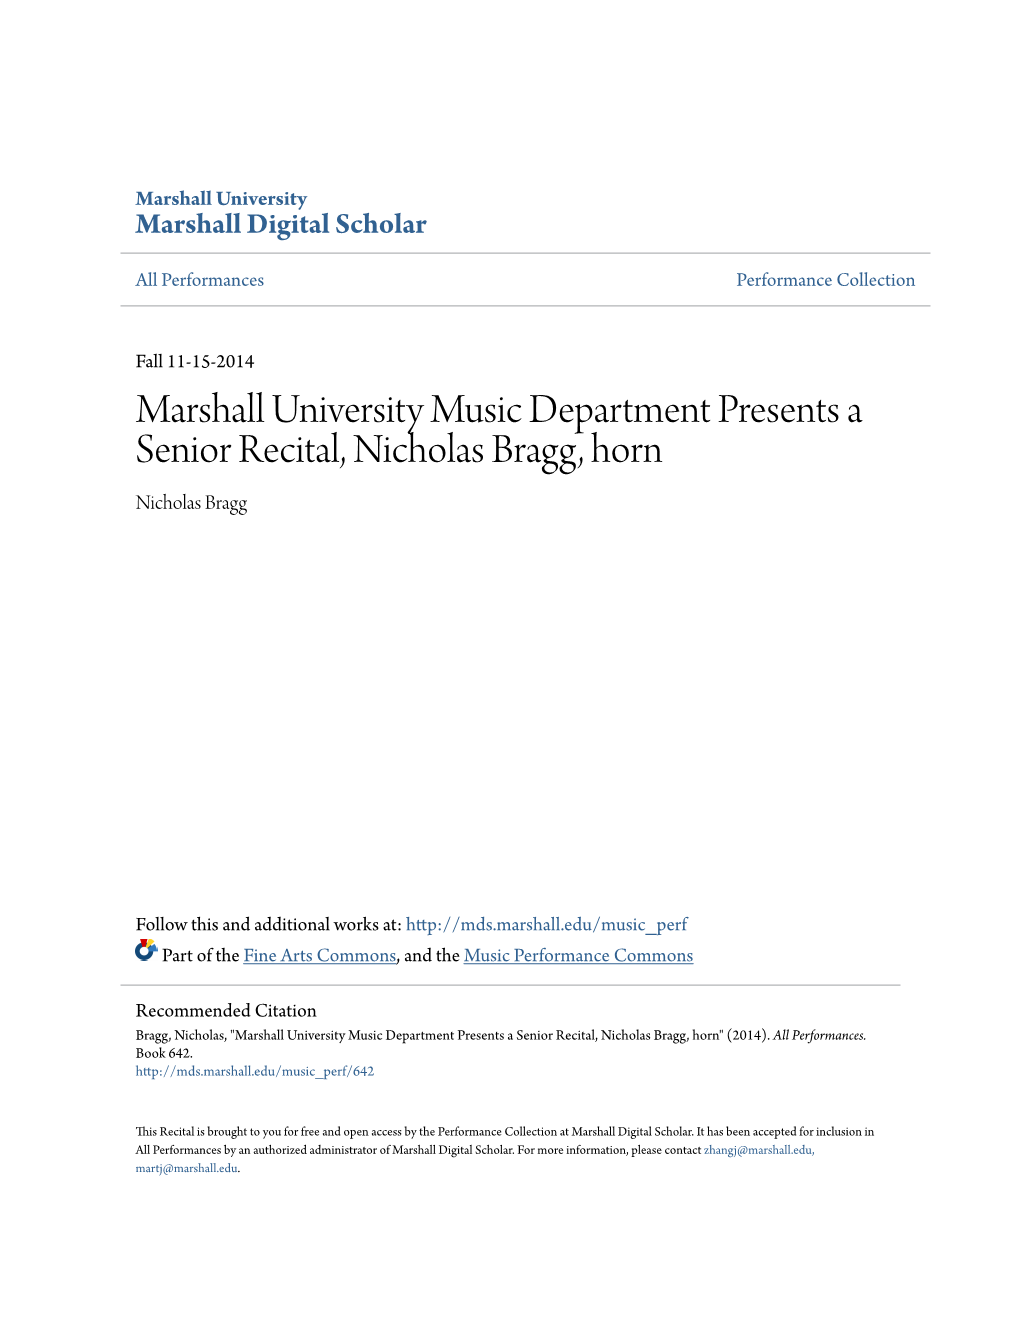 Marshall University Music Department Presents a Senior Recital, Nicholas Bragg, Horn Nicholas Bragg